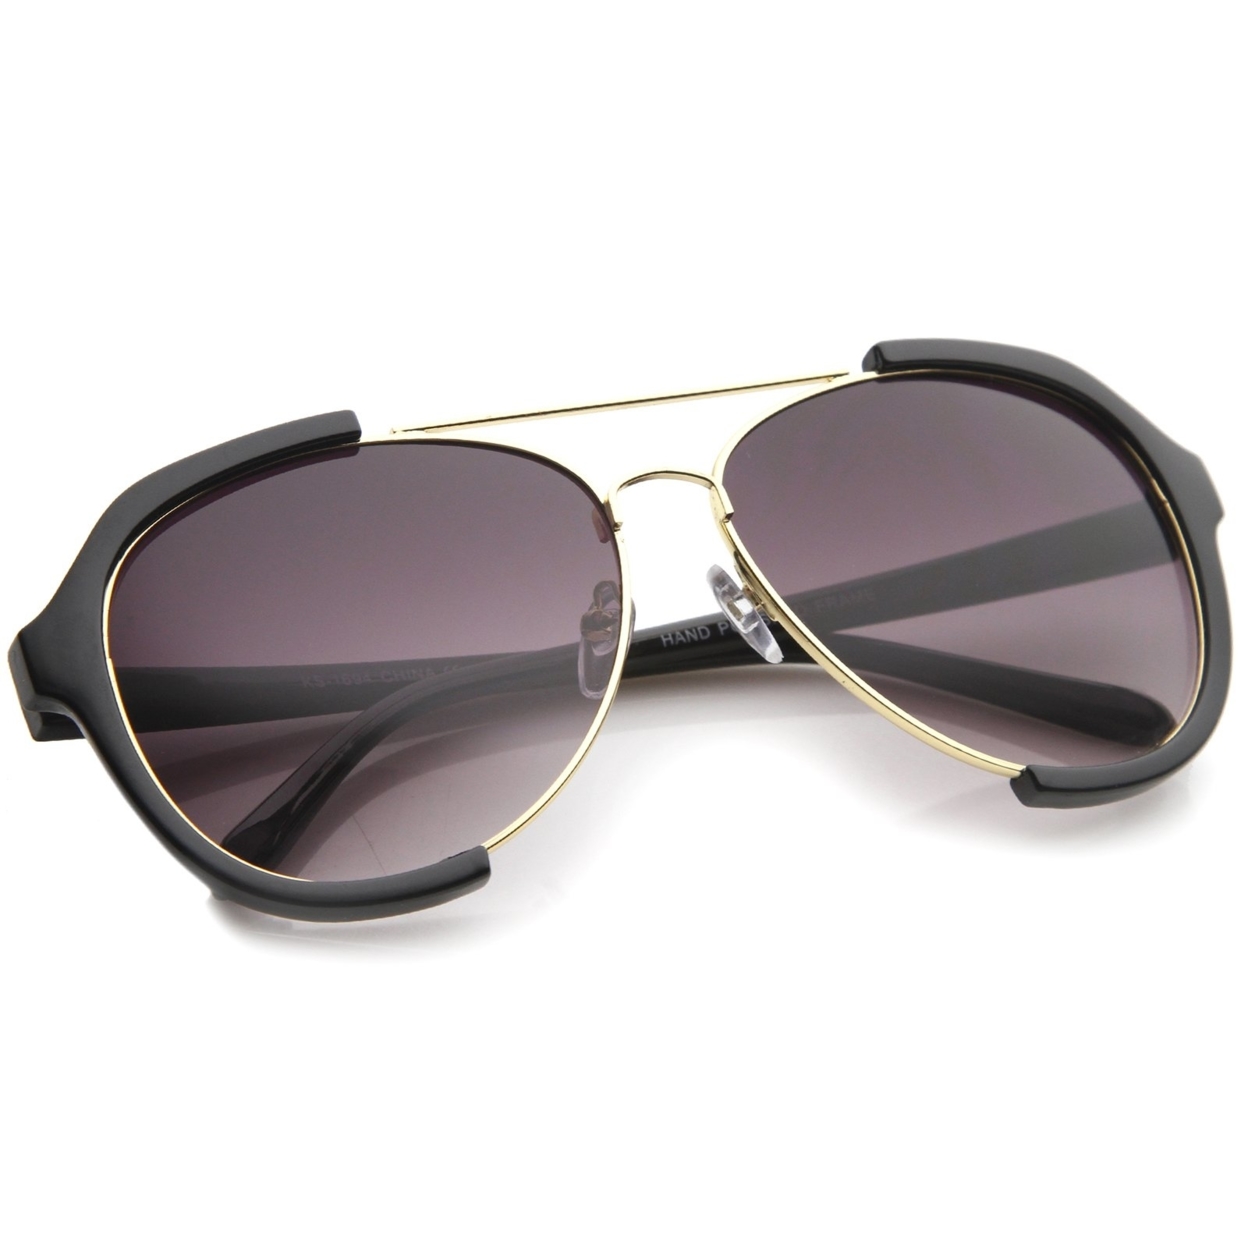 Modern Oversize Metal Crossbar Semi-Rimless Aviator Sunglasses 62mm - Black-Gold / Lavender